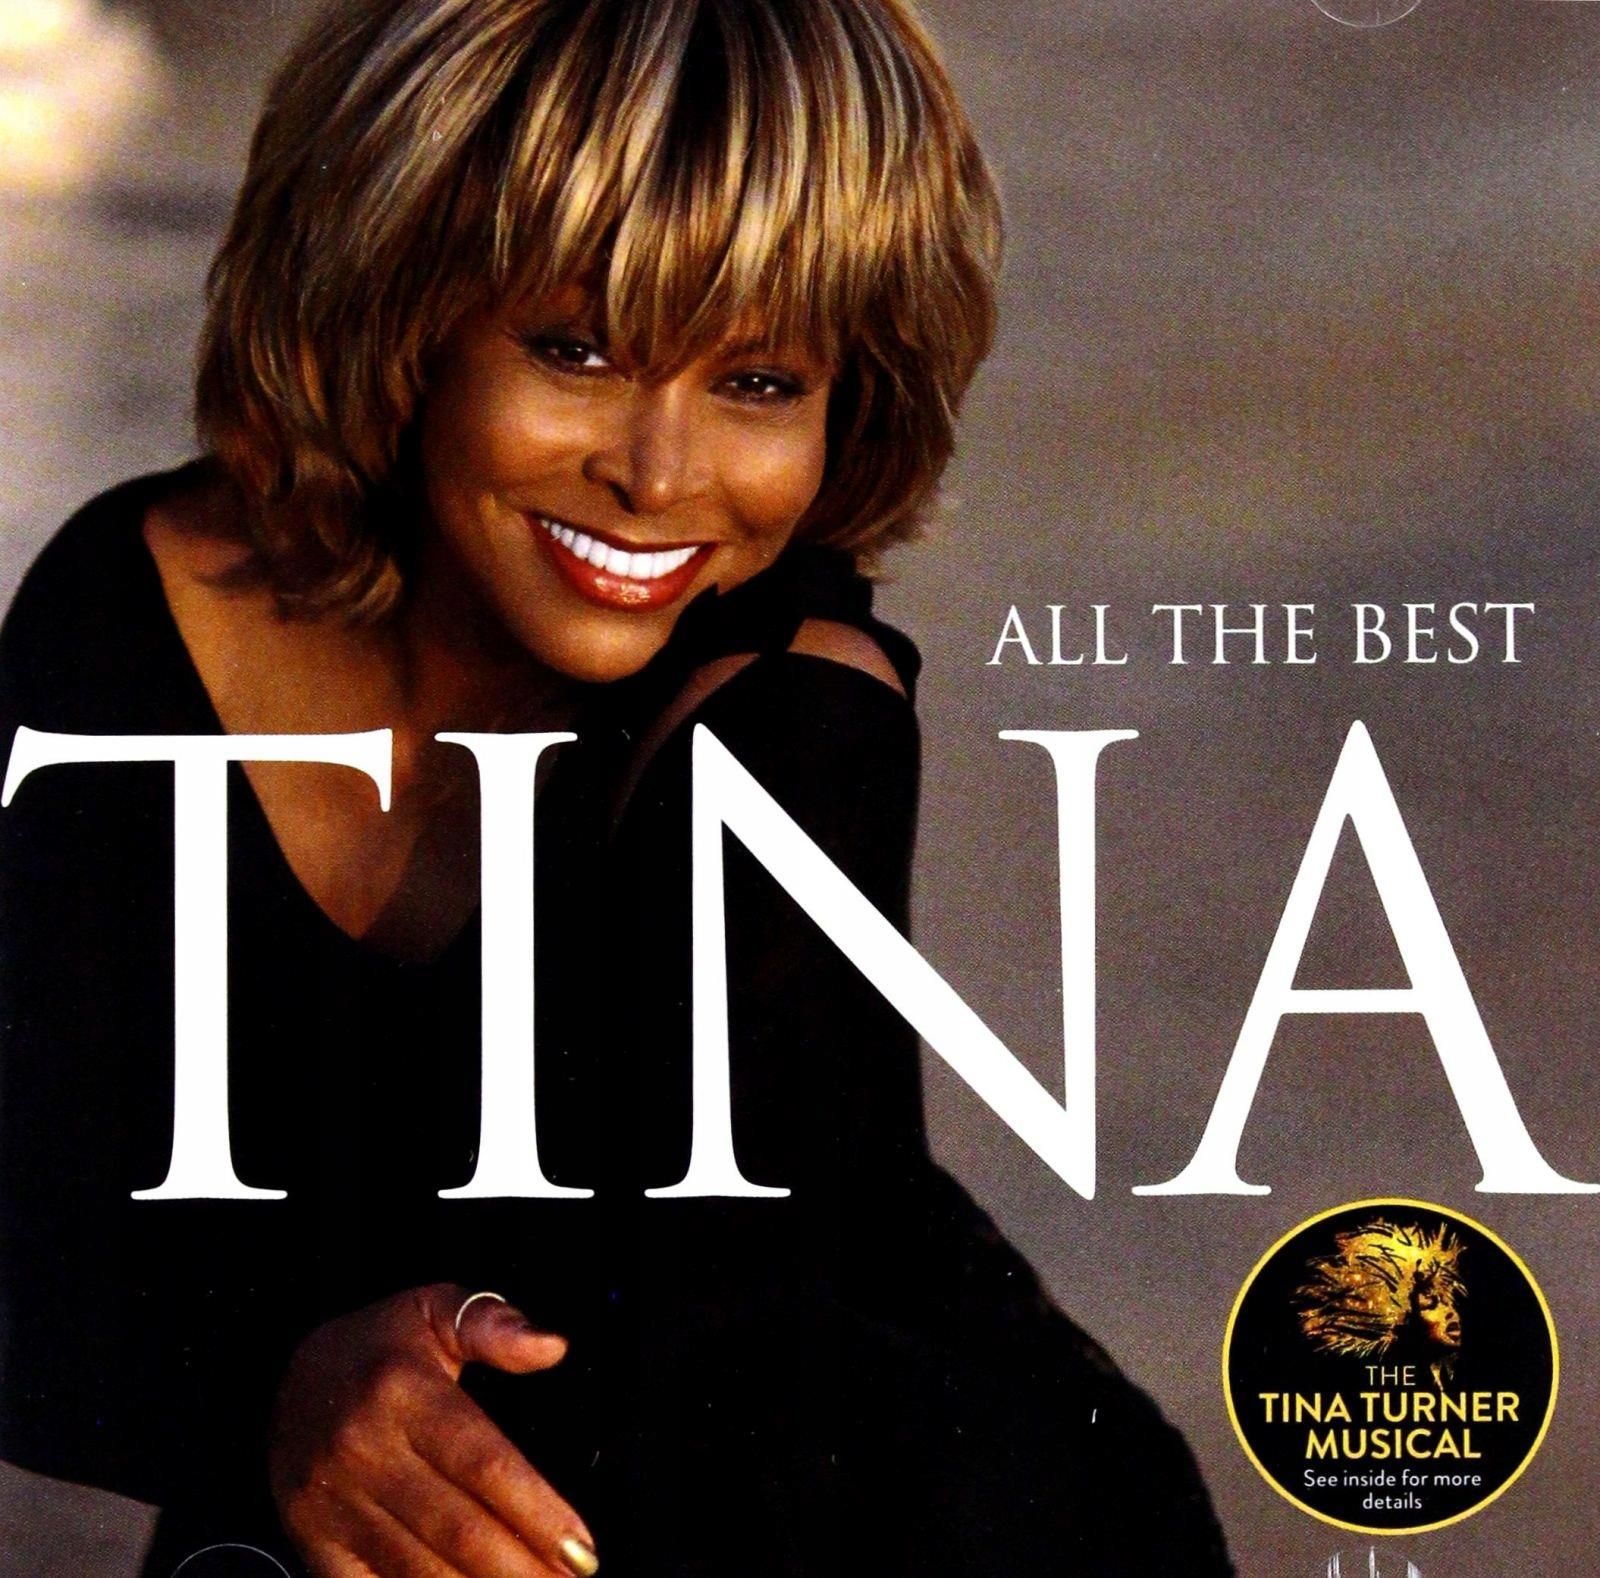 Tina Turner 1983 Live. Альбом тины